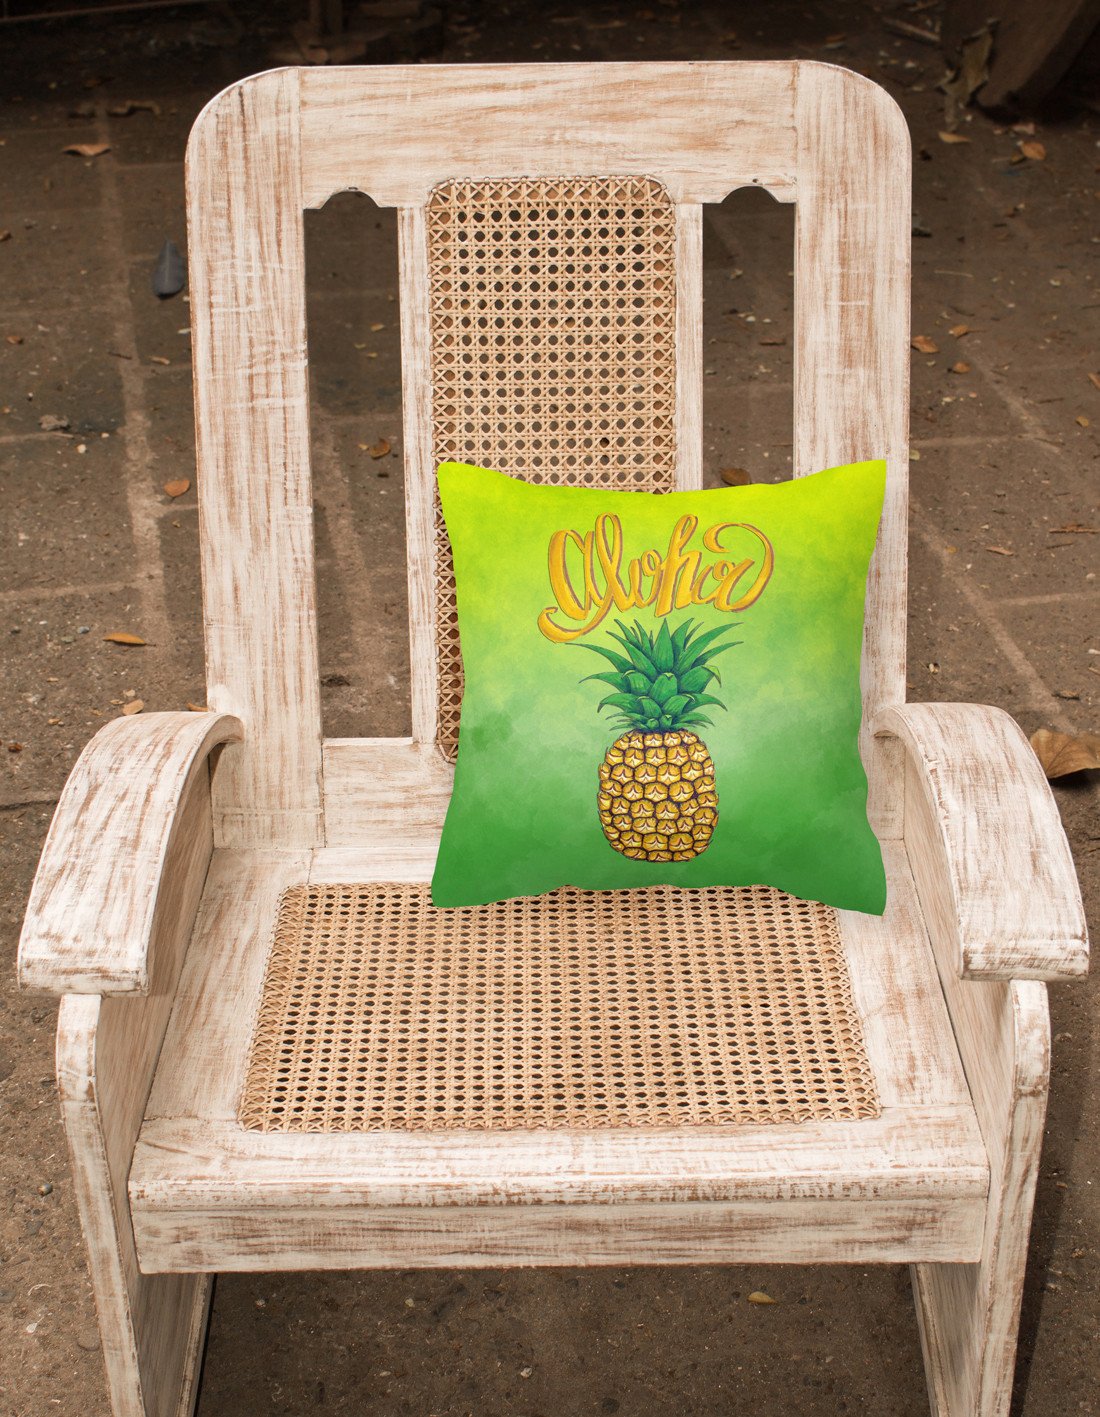 Aloha Pineapple Welcome Fabric Decorative Pillow BB7451PW1818 by Caroline's Treasures